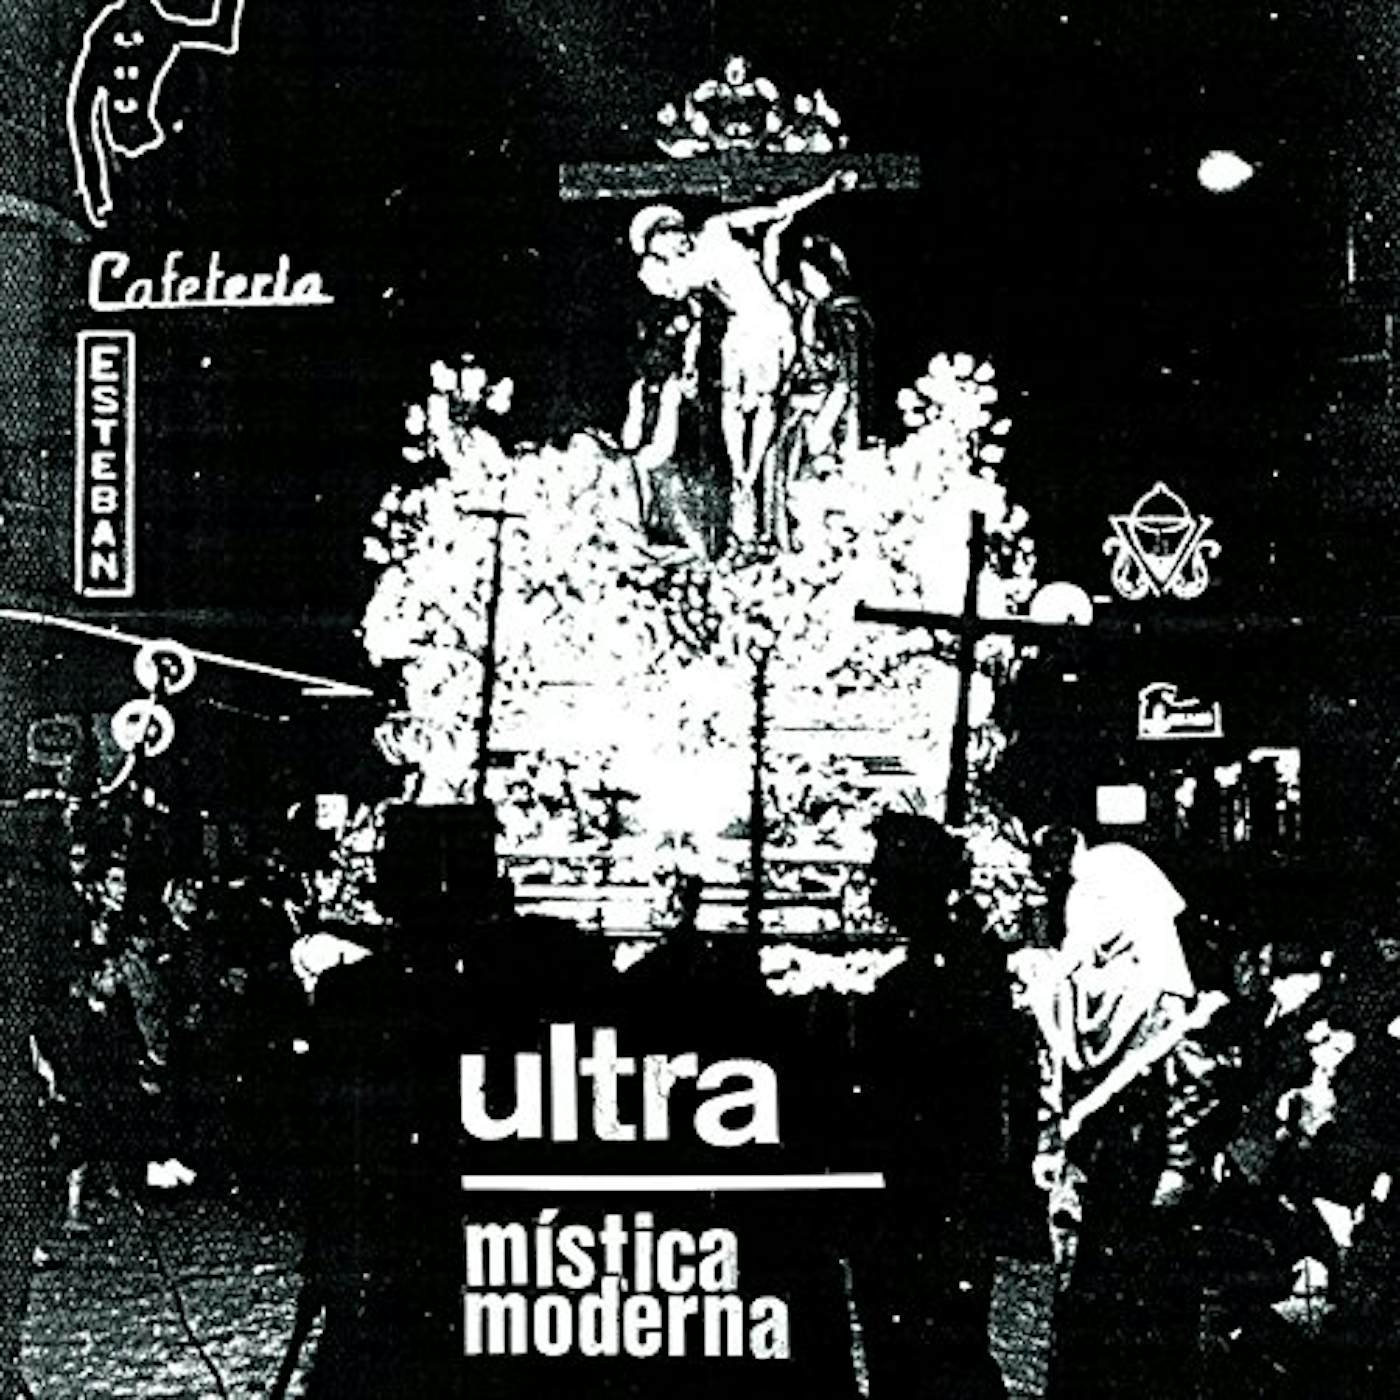 Ultra MISTICA MODERNA Vinyl Record